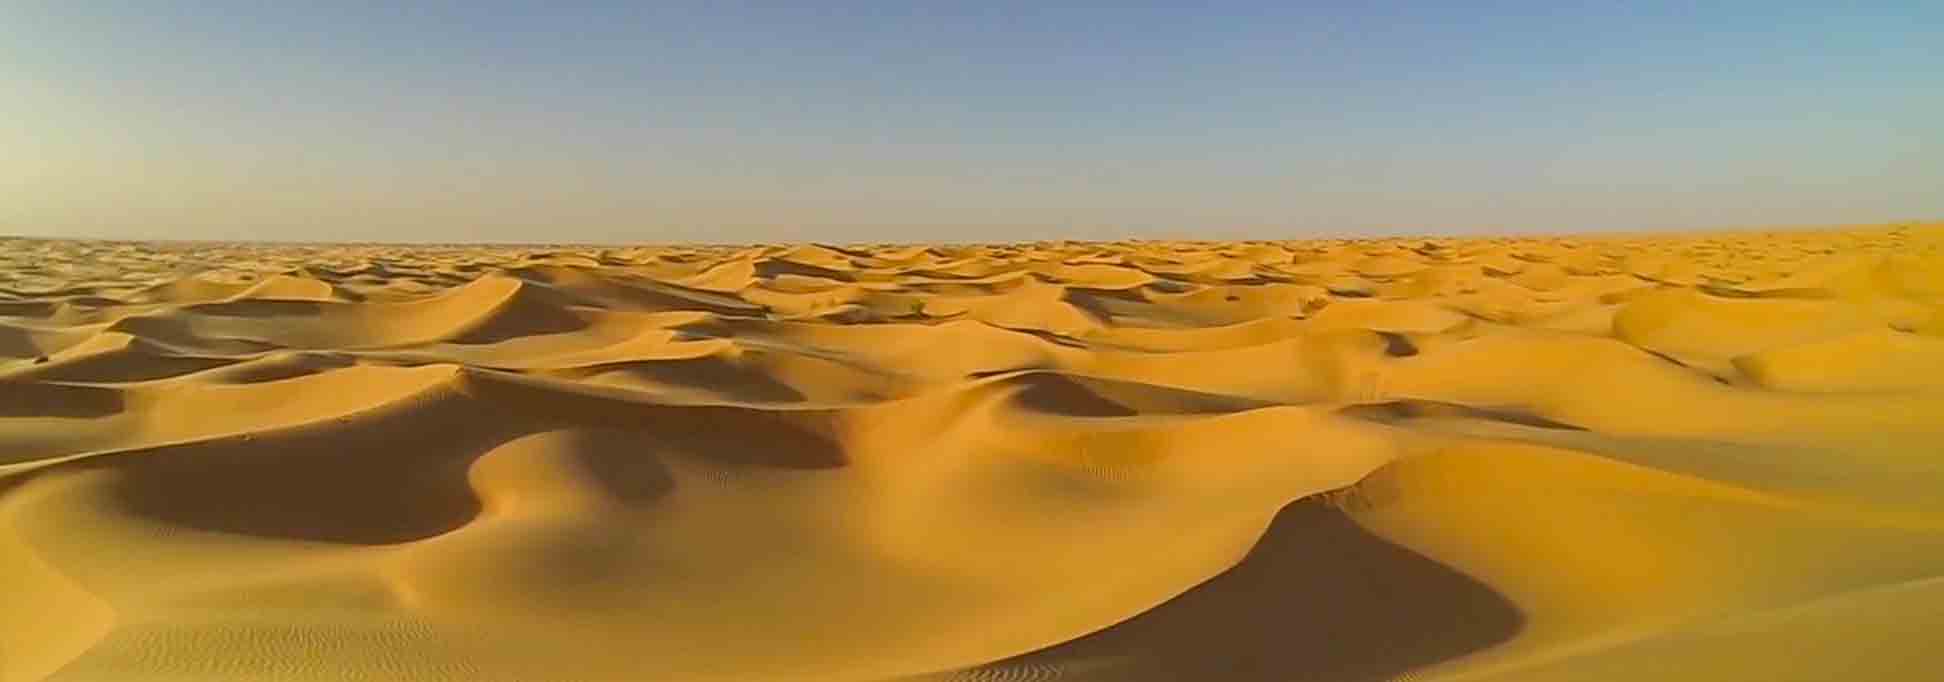 Dunes in Algeria in the Sahara Desert 